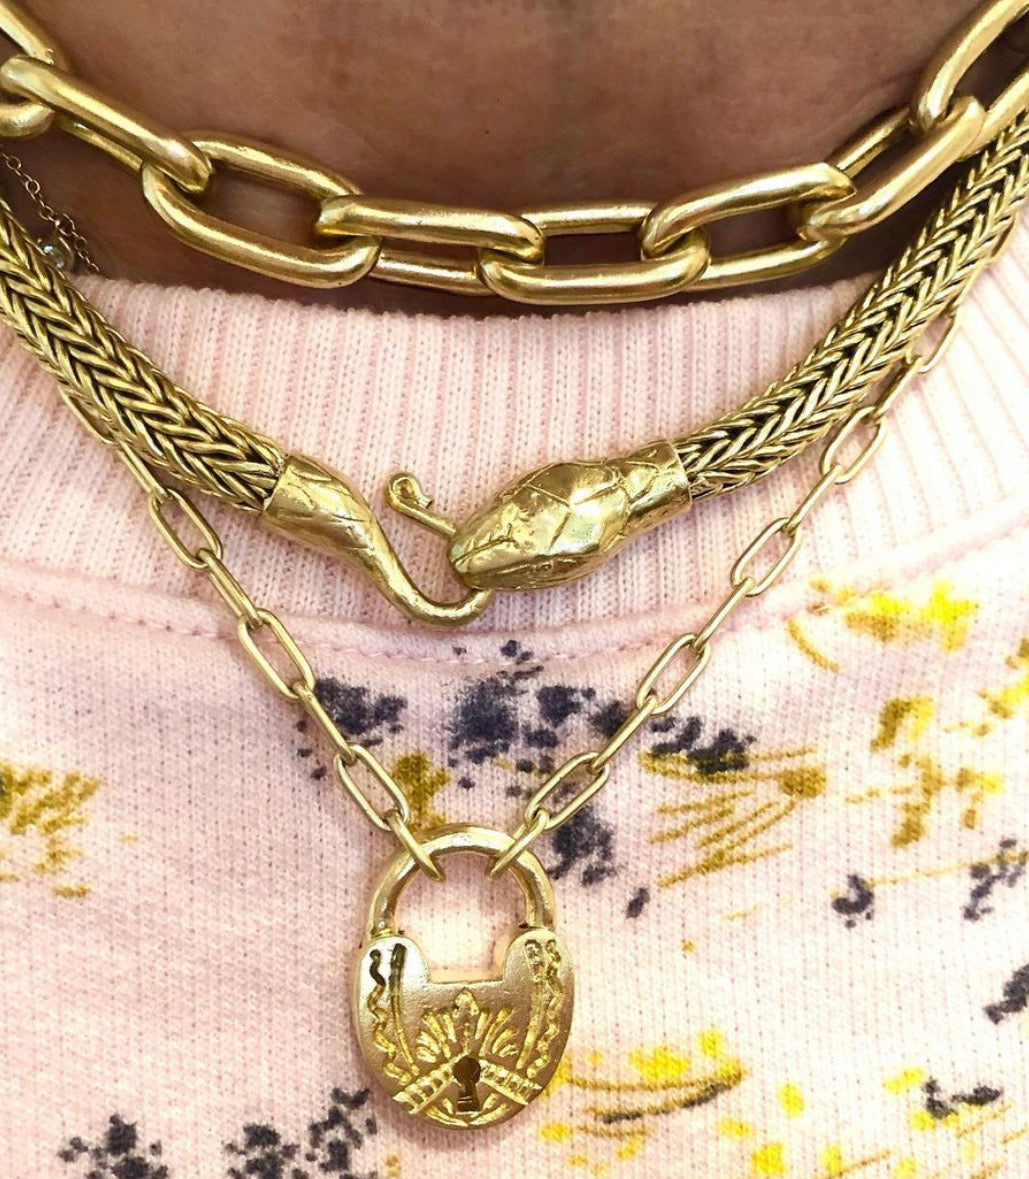 Gembok pendant necklace.